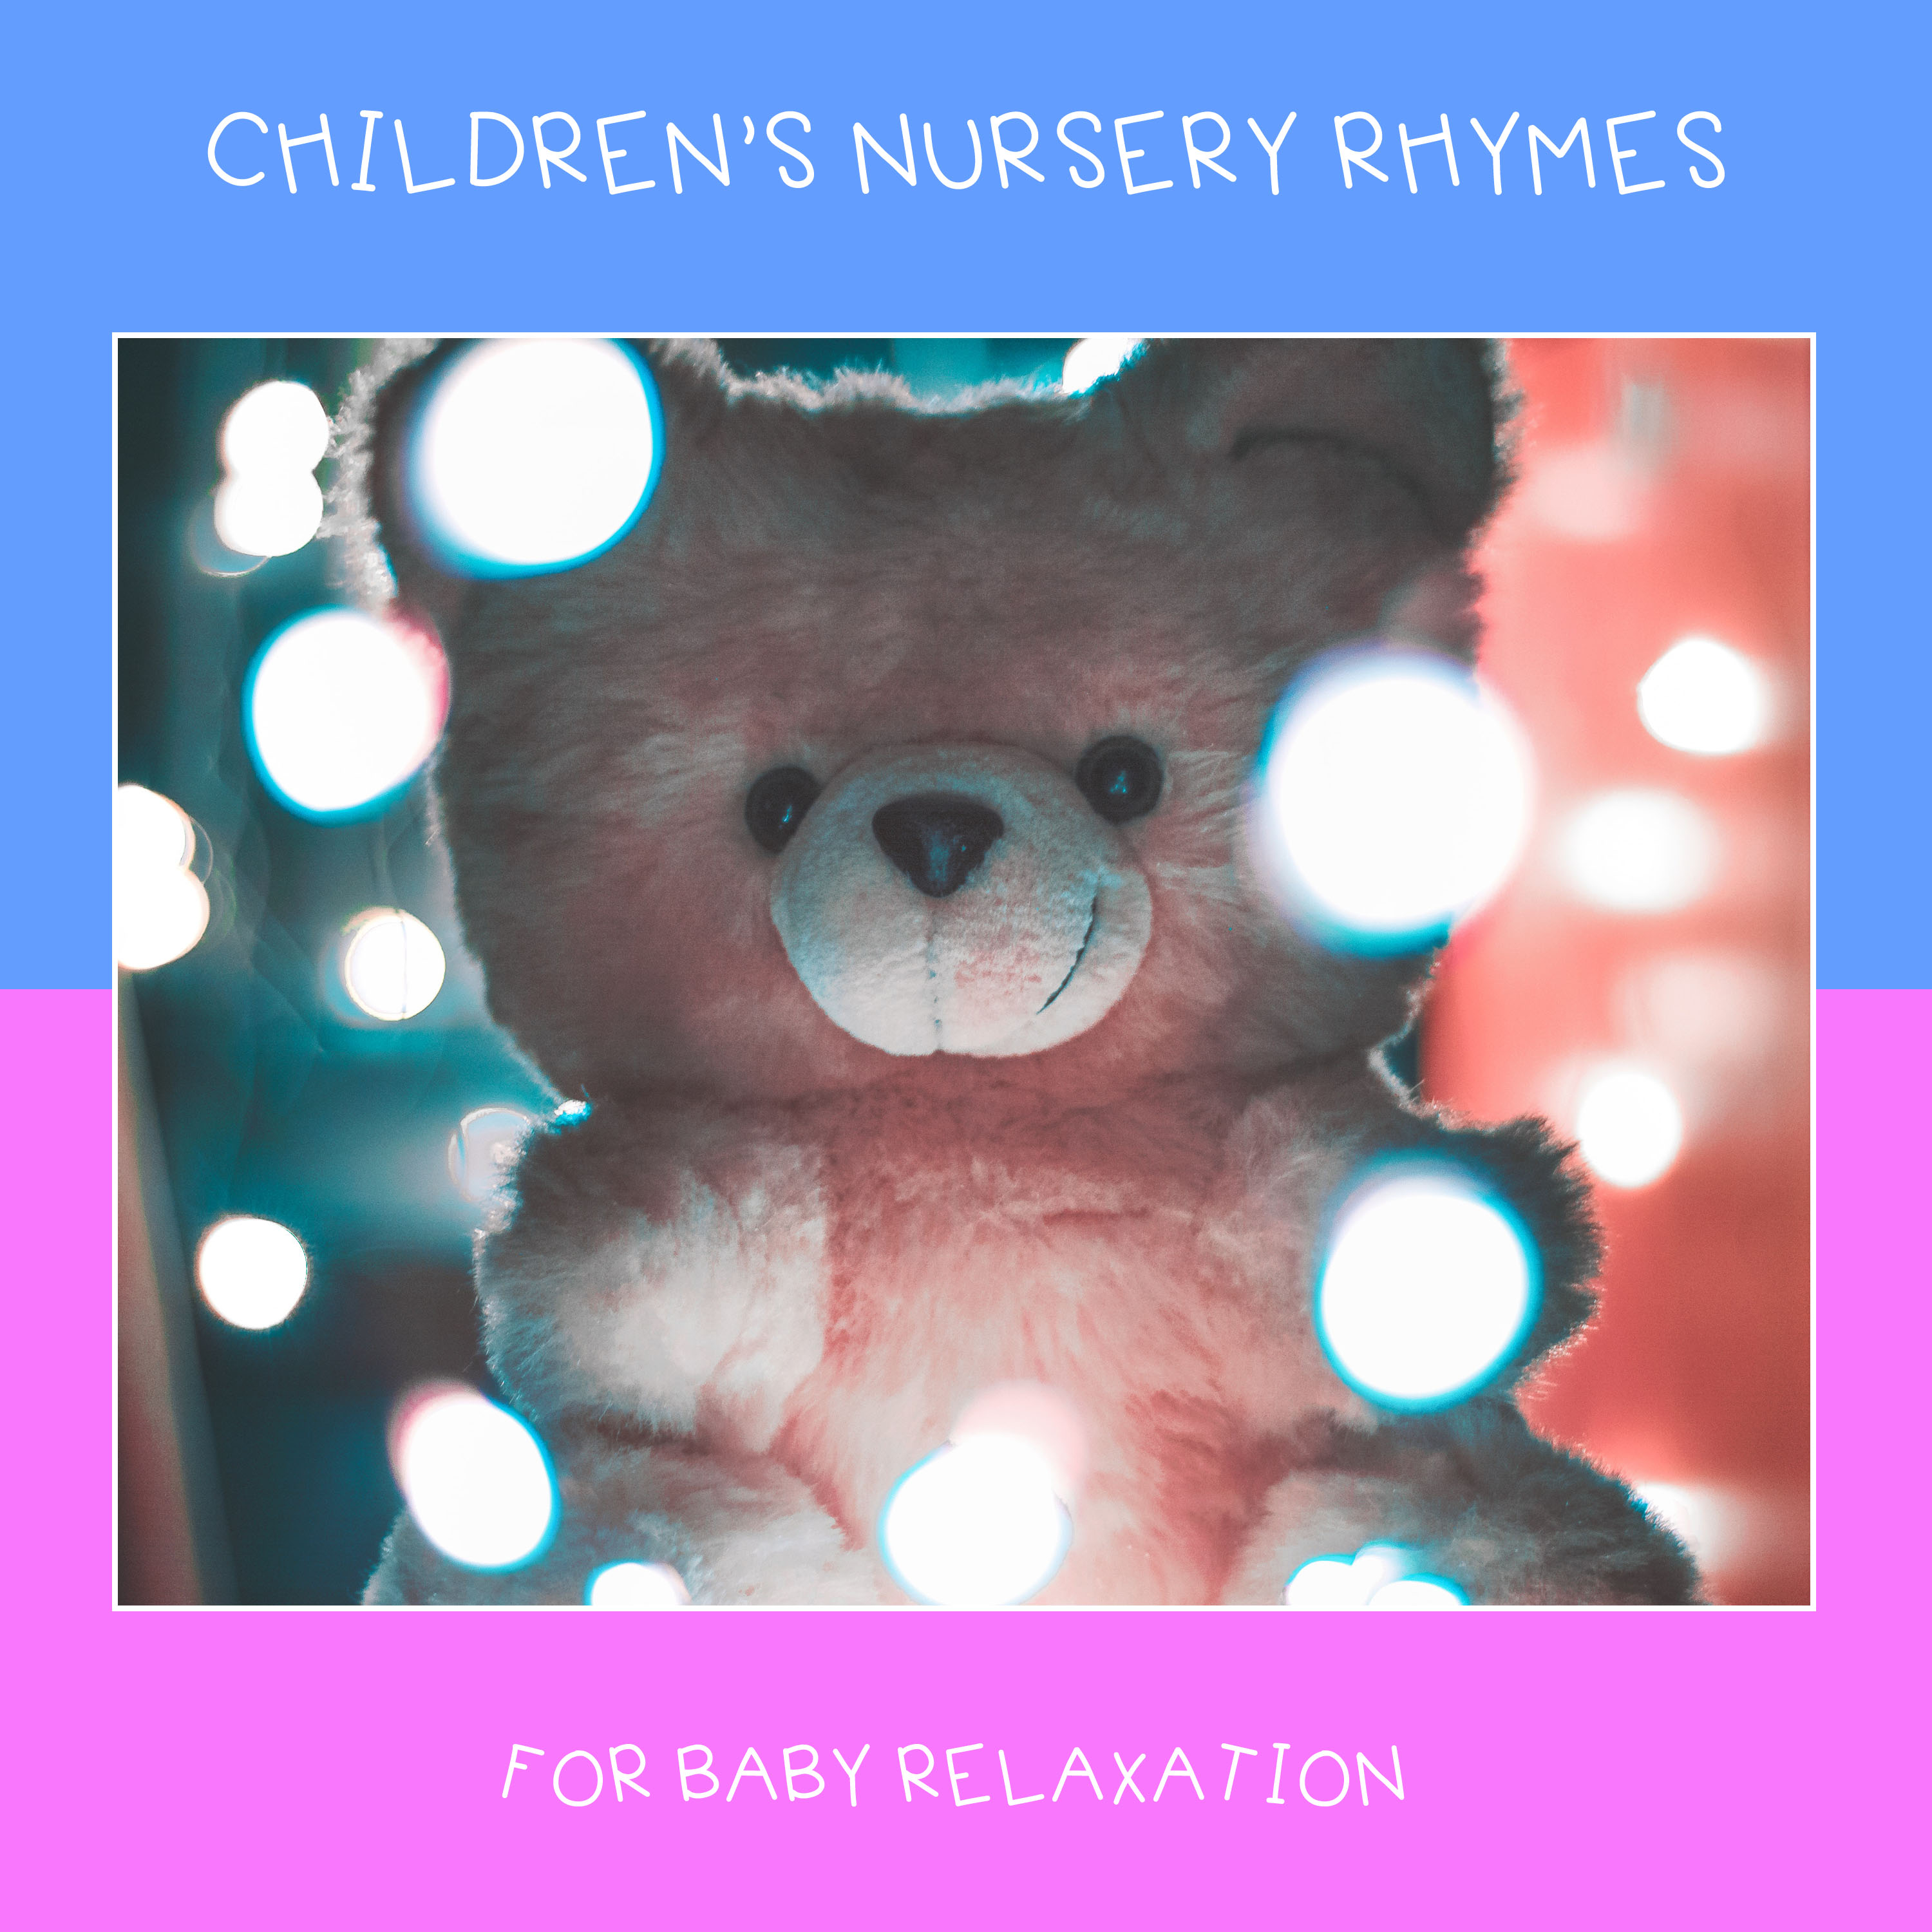 11 Children's Nursery Rhymes for Deeper Sleep & Relaxation